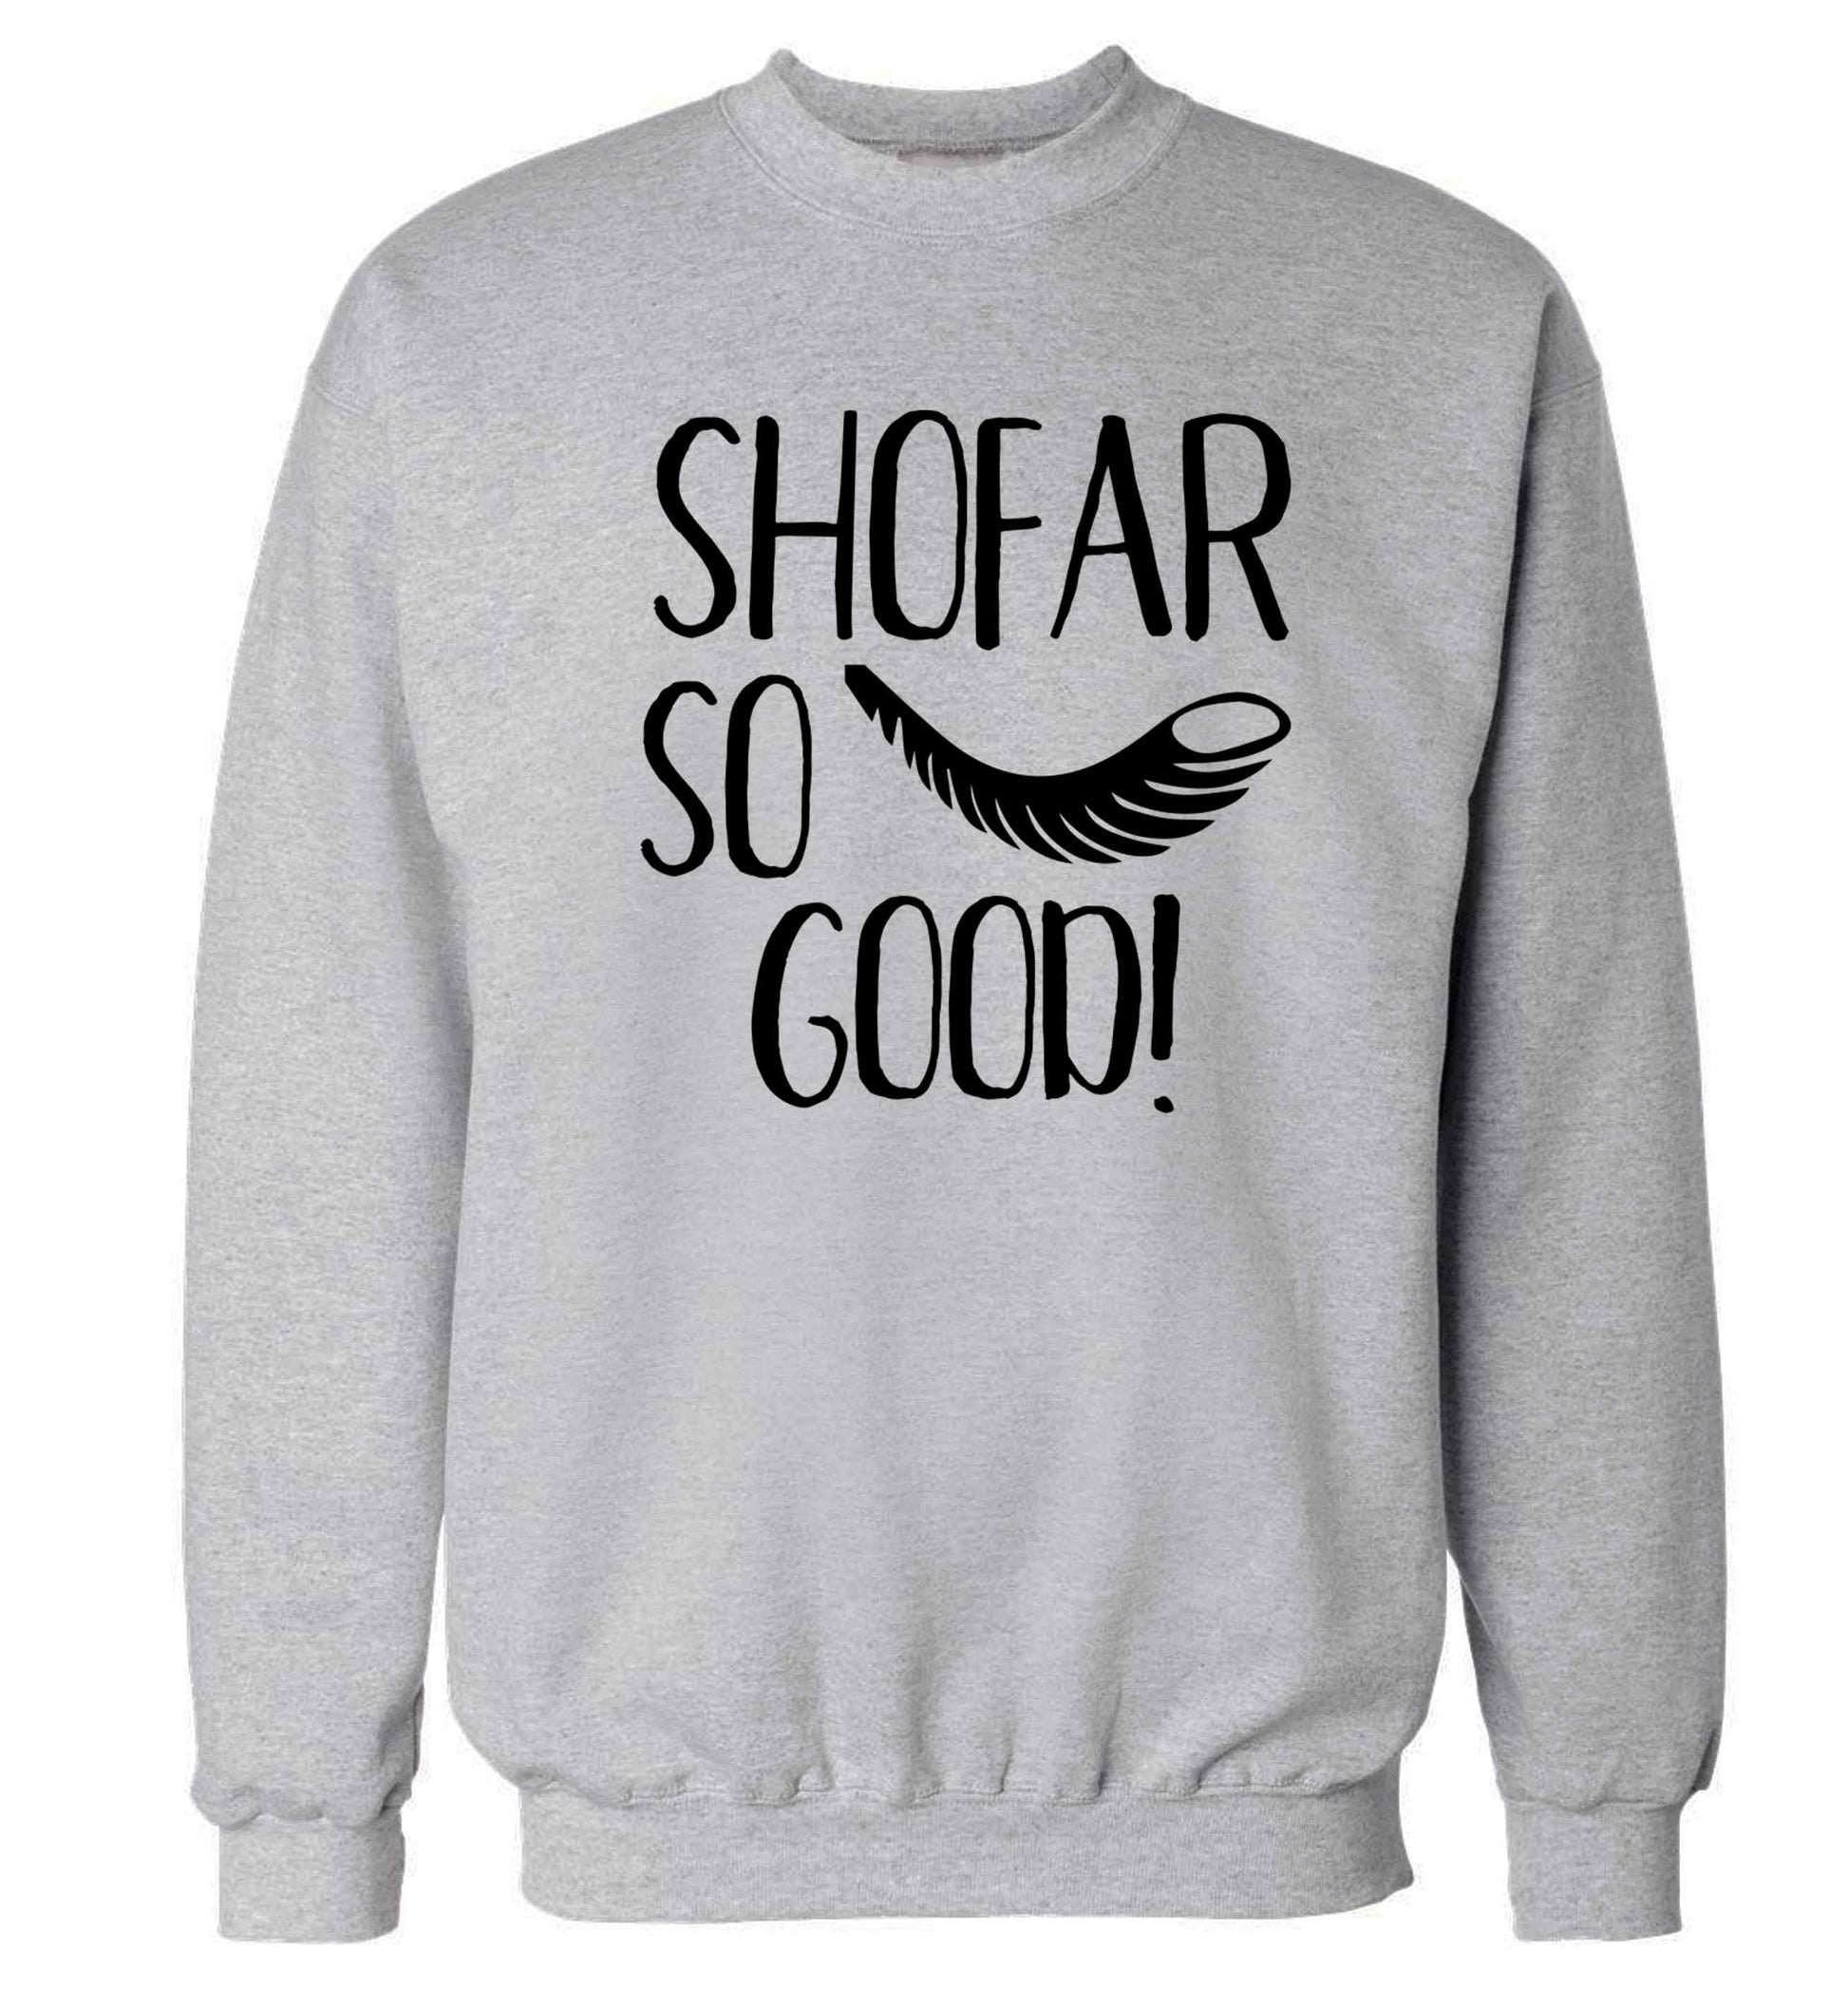 Shofar so good! Adult's unisex grey Sweater 2XL